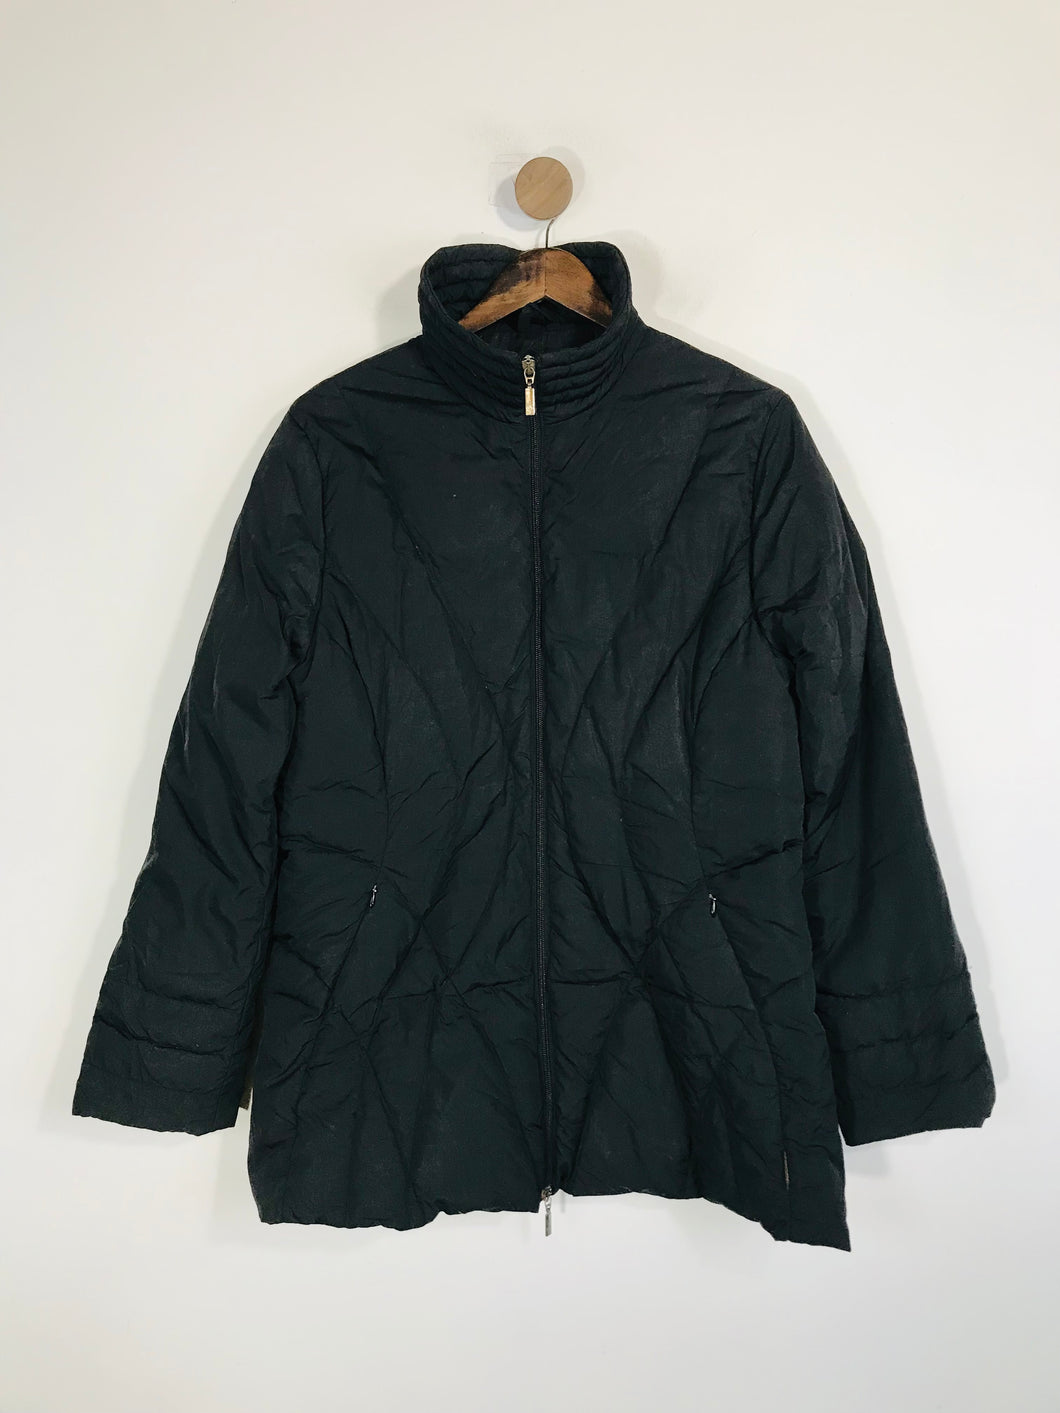 Moncler Men's Puffer Quilted Jacket | 4 | Black